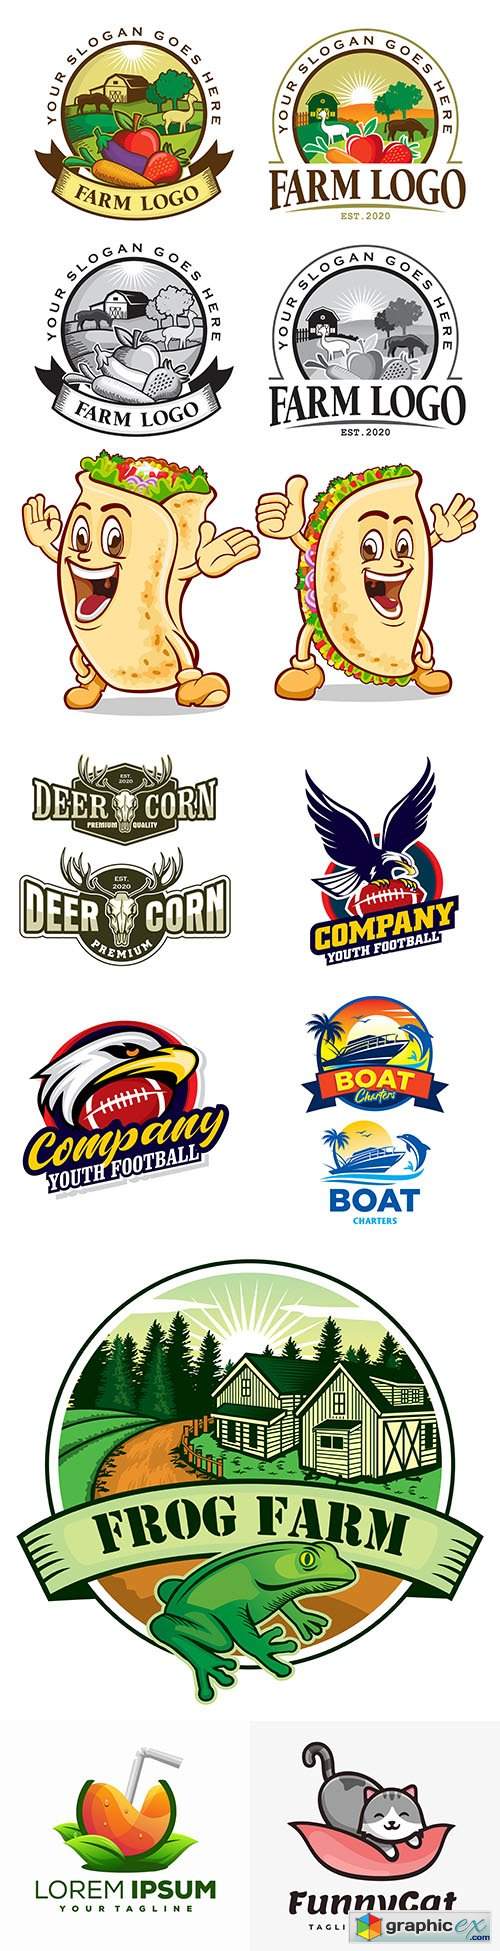  Brand name company logos business corporate design 71 